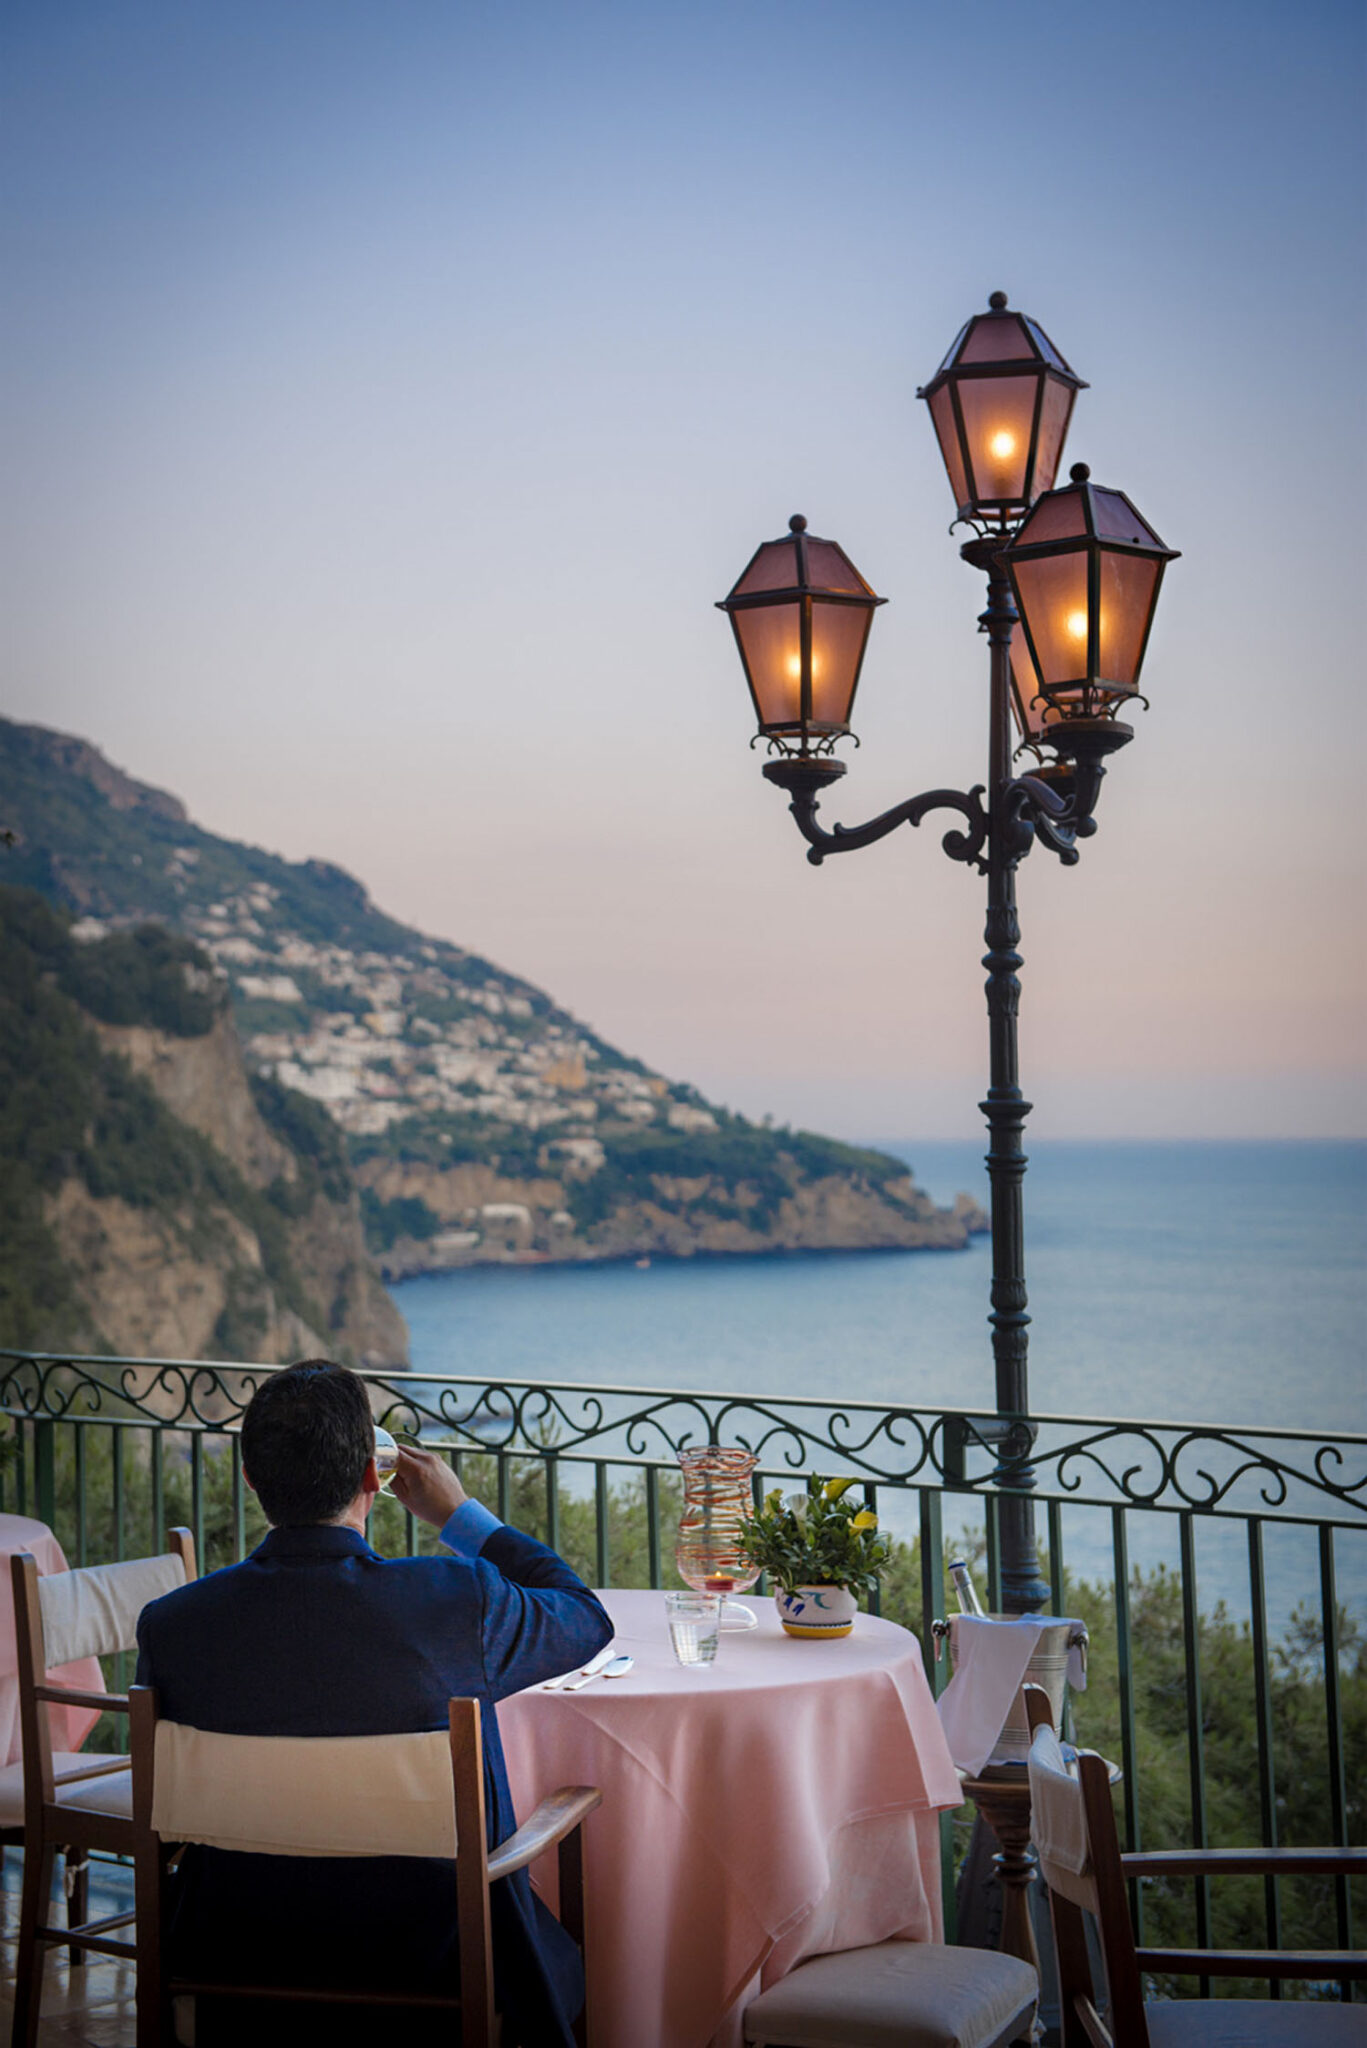 Best Restaurants in Positano, Italy for Authentic Italian Food ...